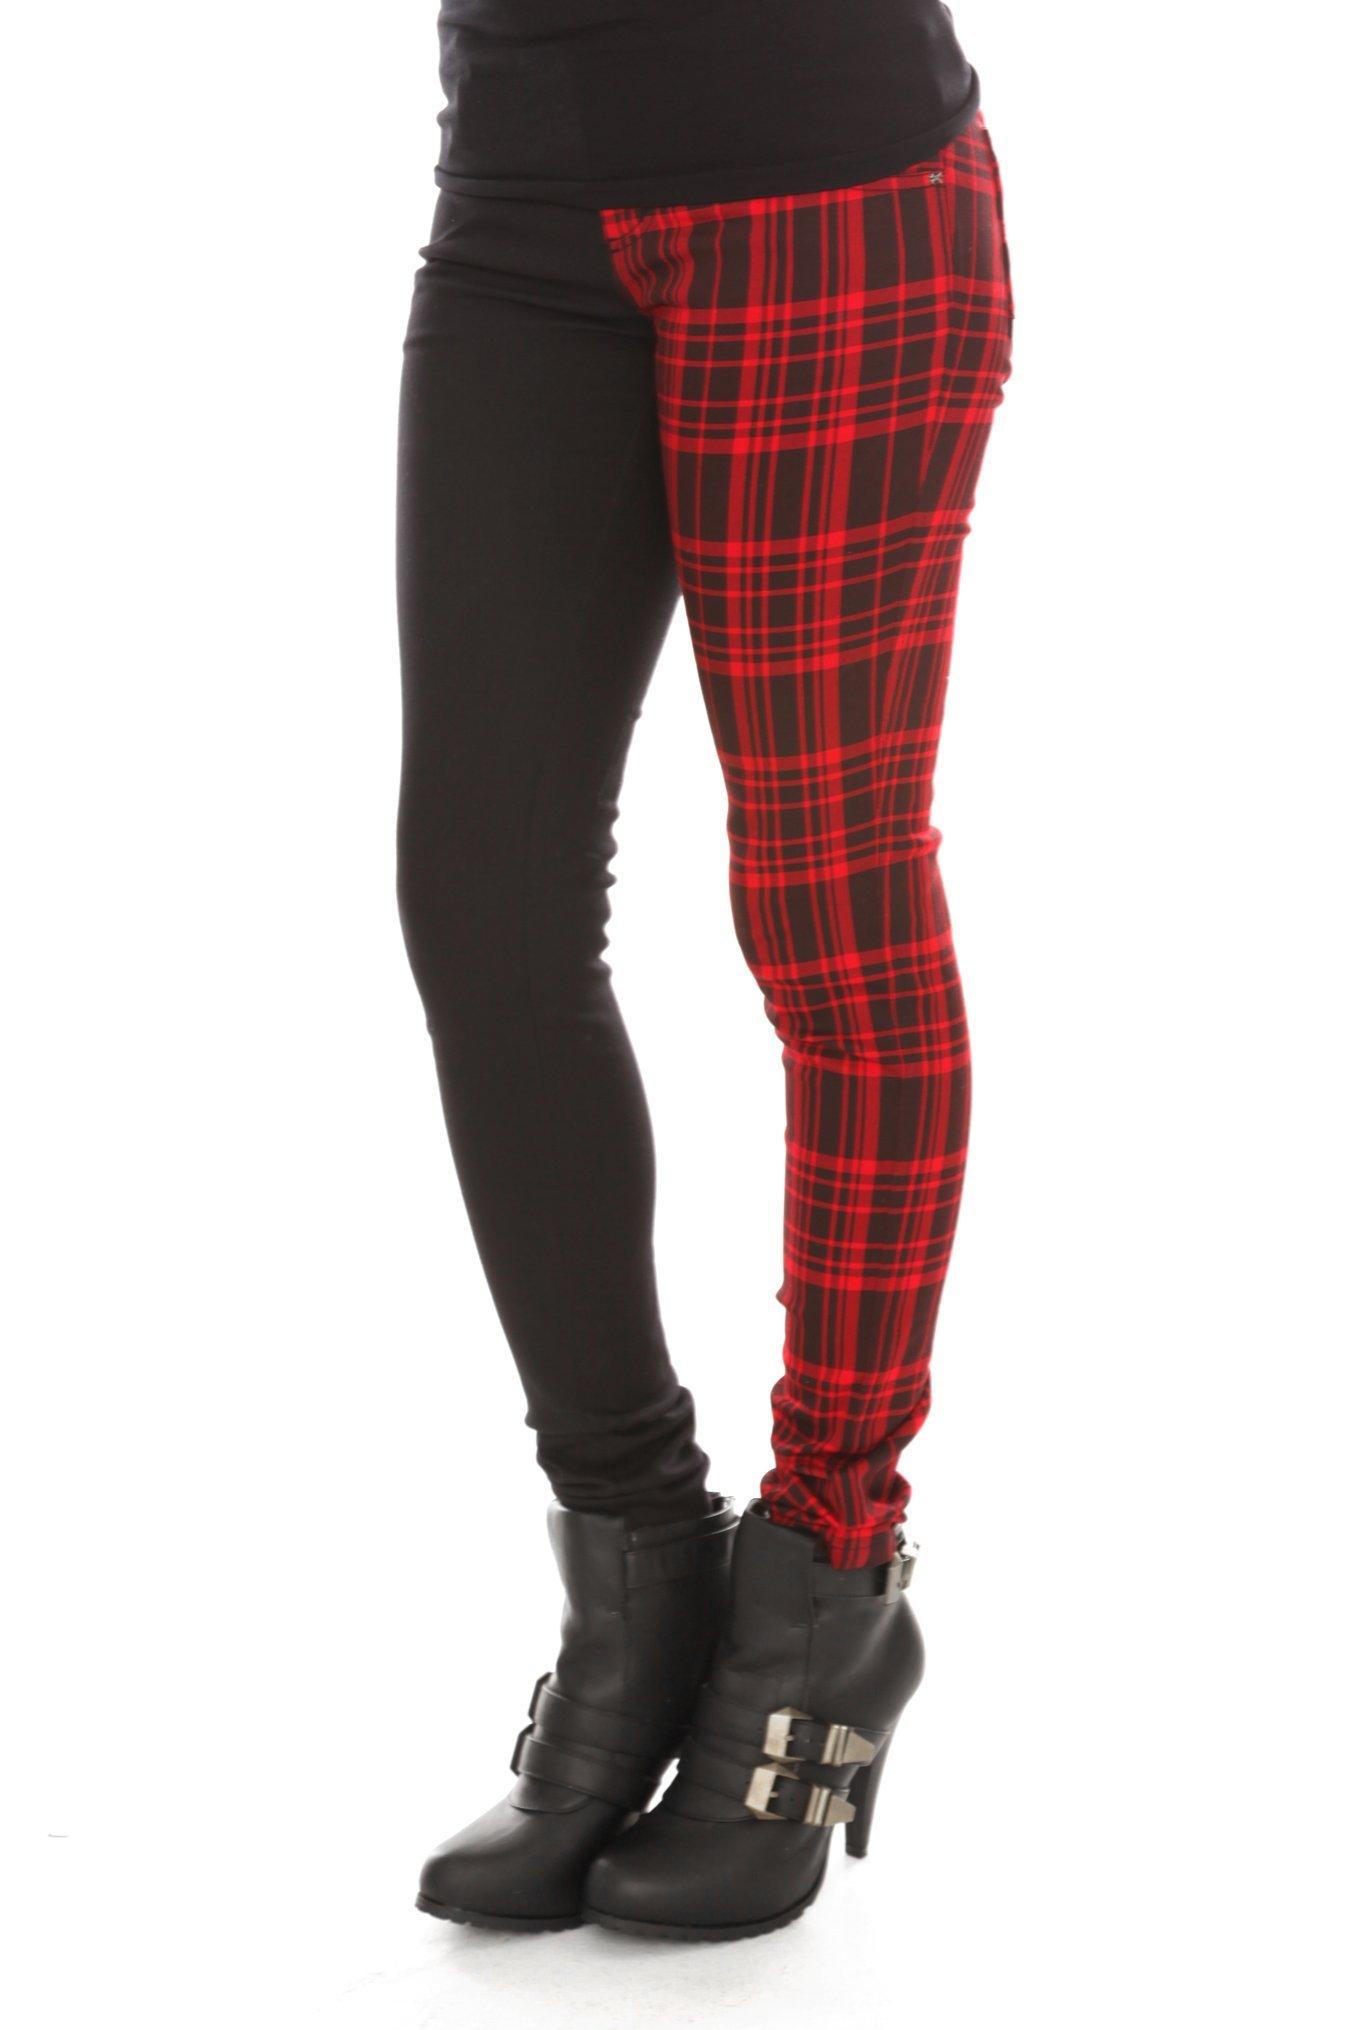 Royal Bones By Tripp Black And Red Plaid Split Leg Skinny Jeans, BLACK, hi-res